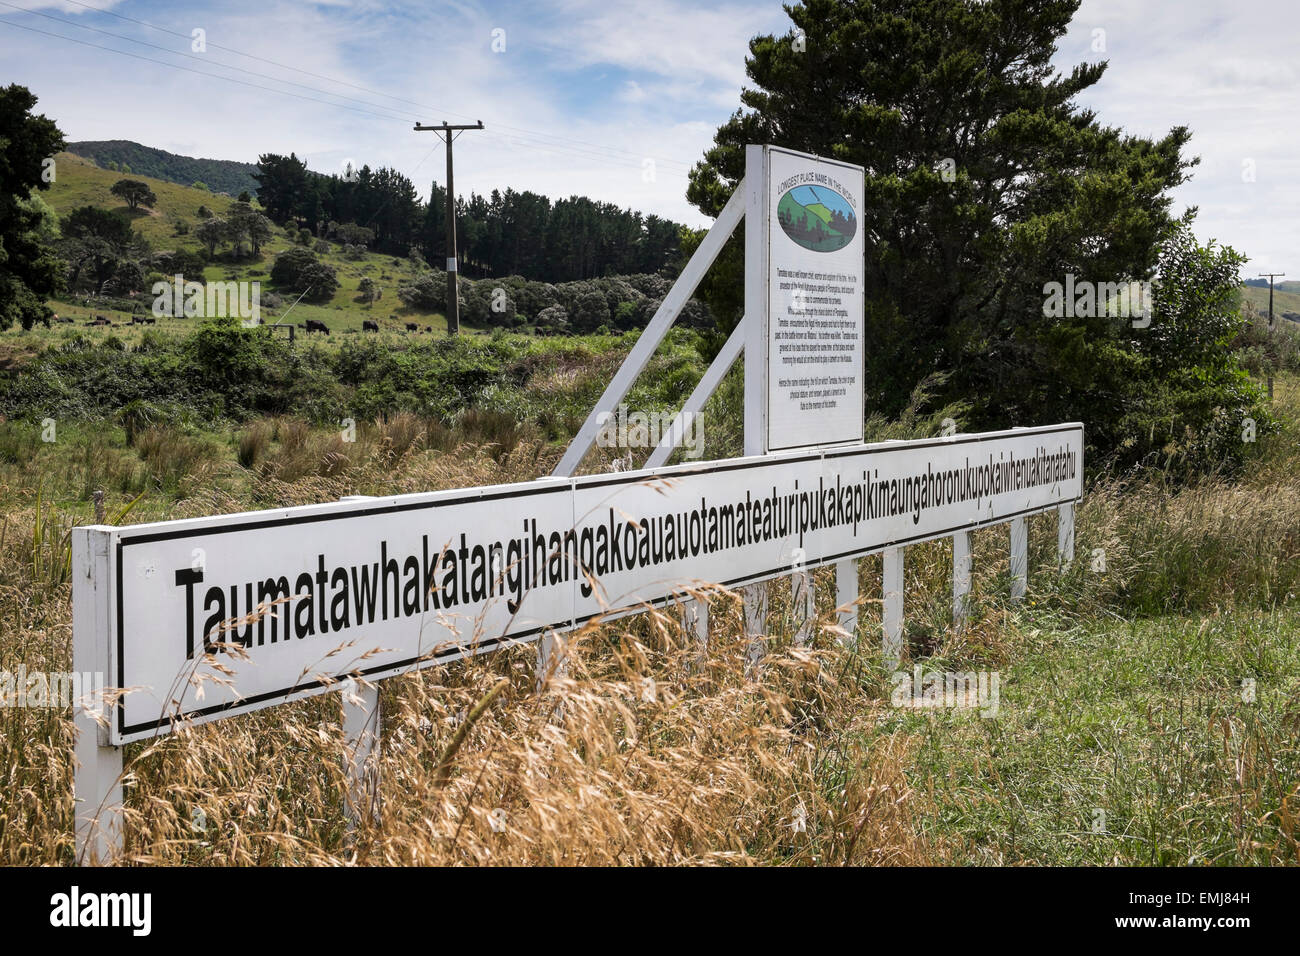 Taumatawhakatangihangakoauauotamateaturipukakapikimaungahoronukupokaiwhenuakitanatahu nom de lieu le plus long en Nouvelle Zélande Banque D'Images